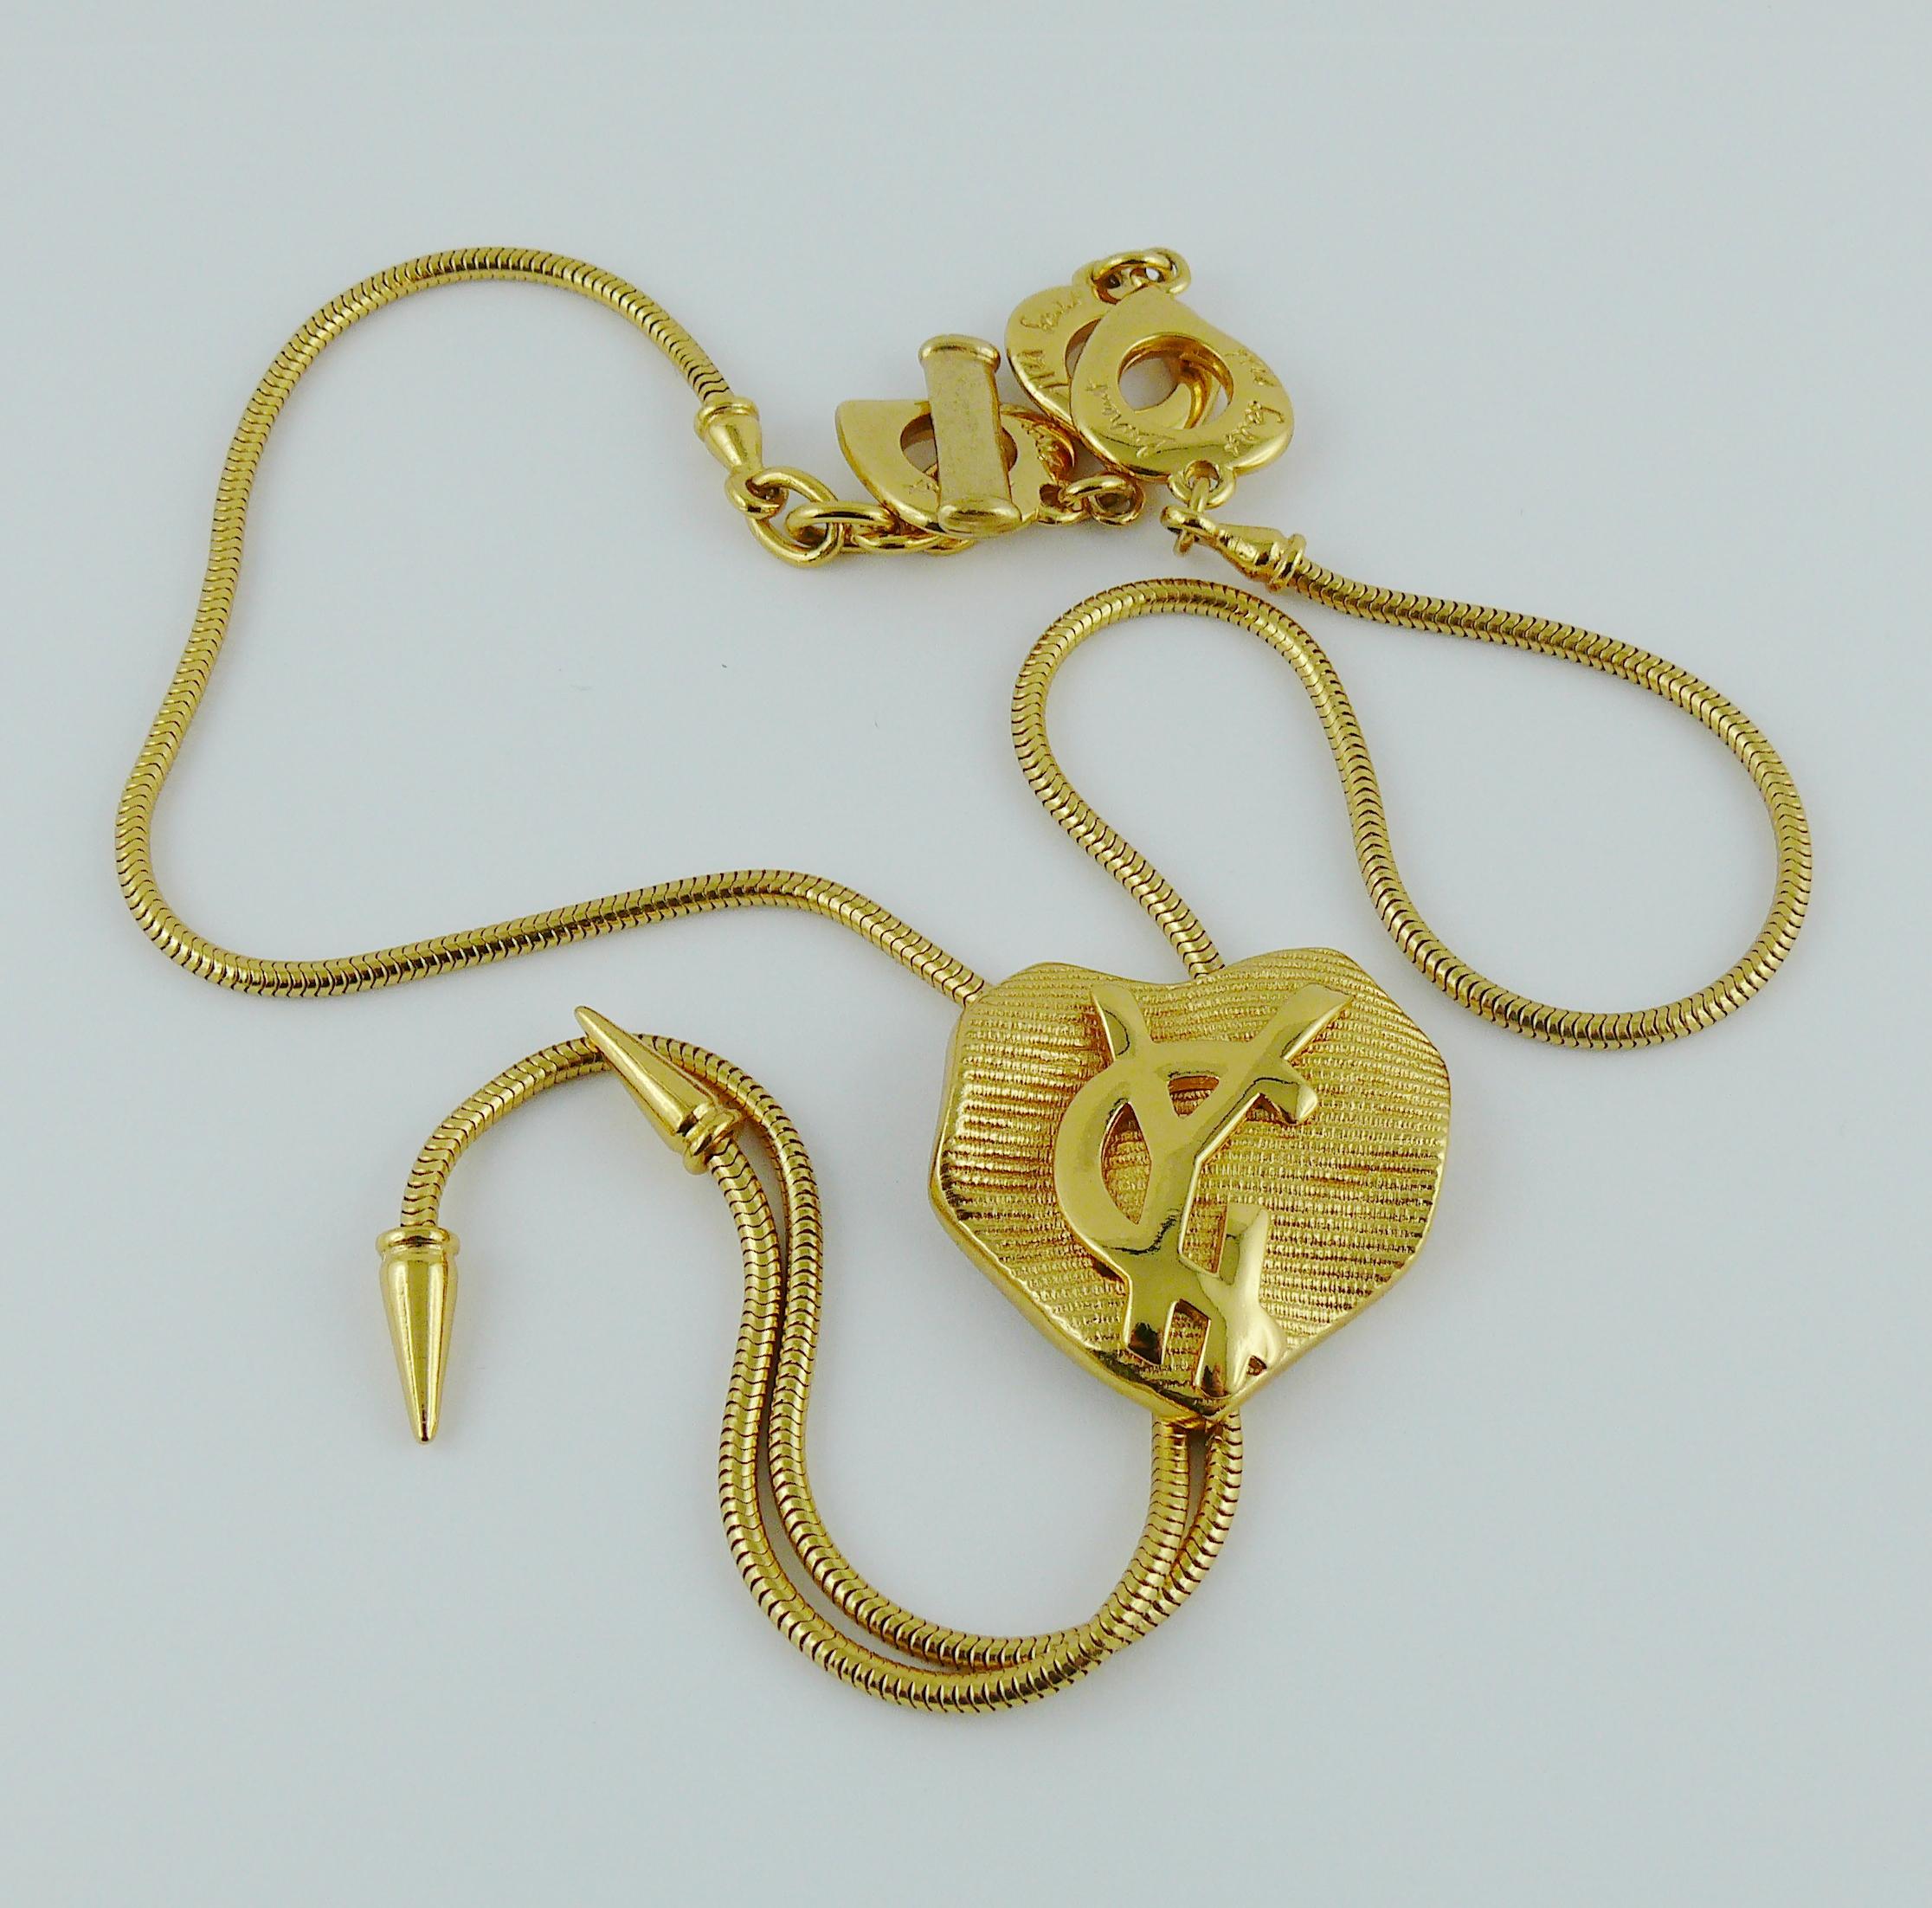 ysl logo necklace gold